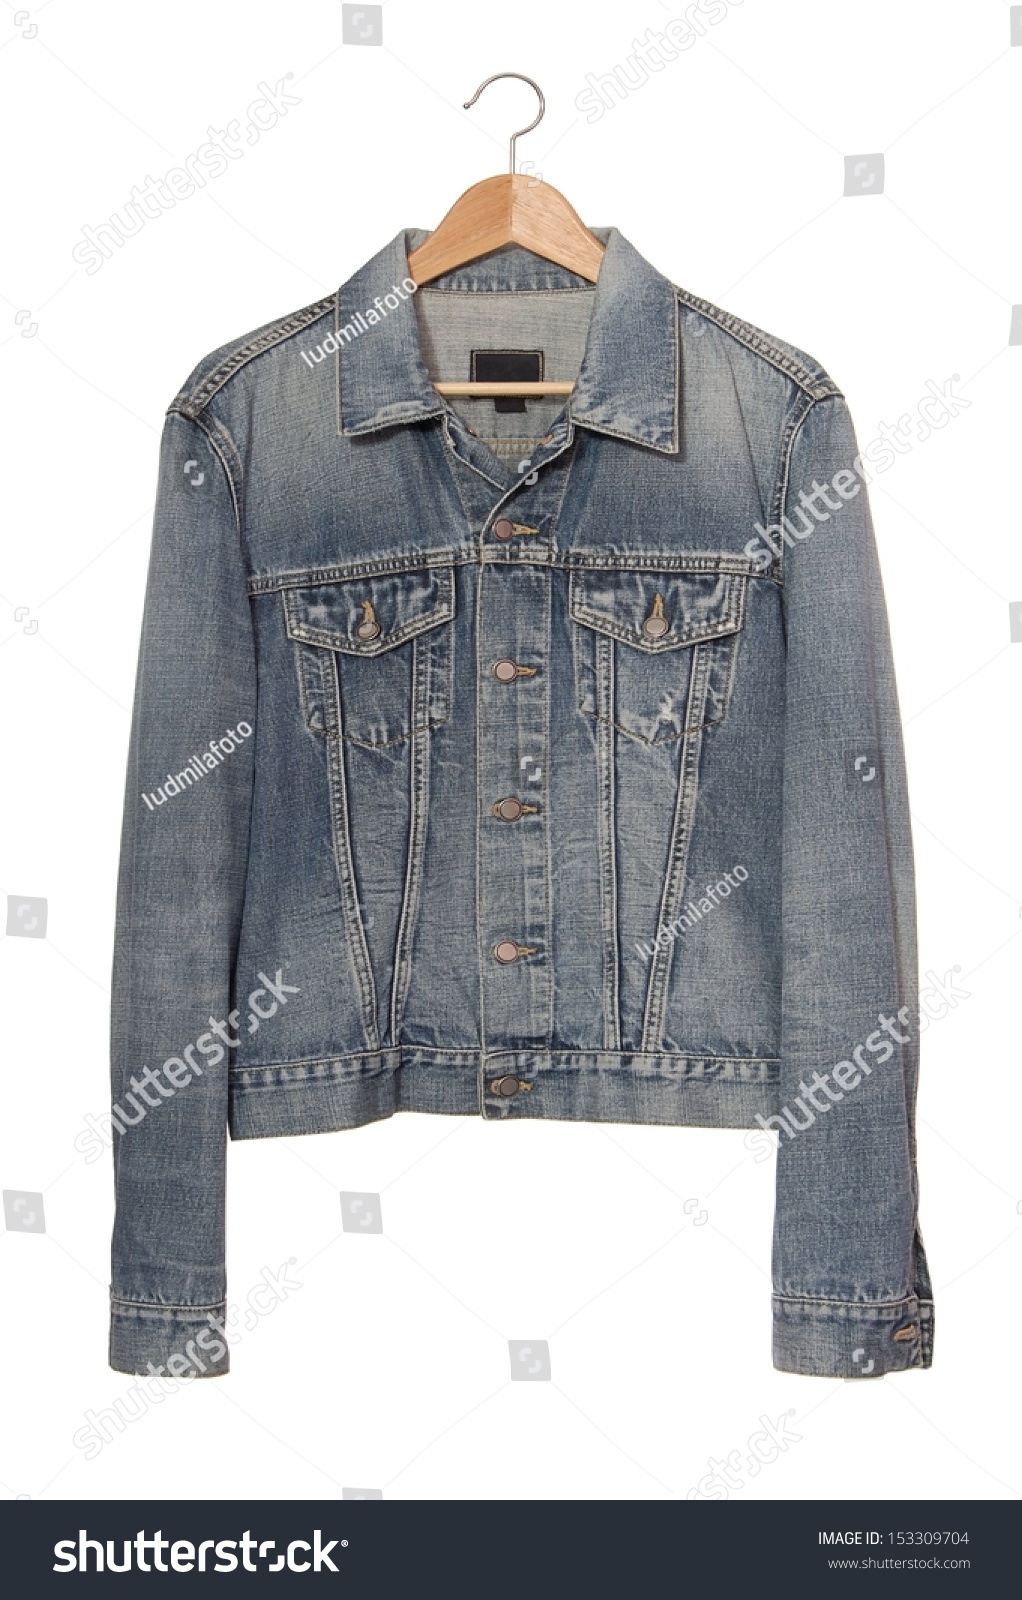 A Denim Jacket Is On Coat-Hanger. Stock Photo 153309704 : Shutterstock